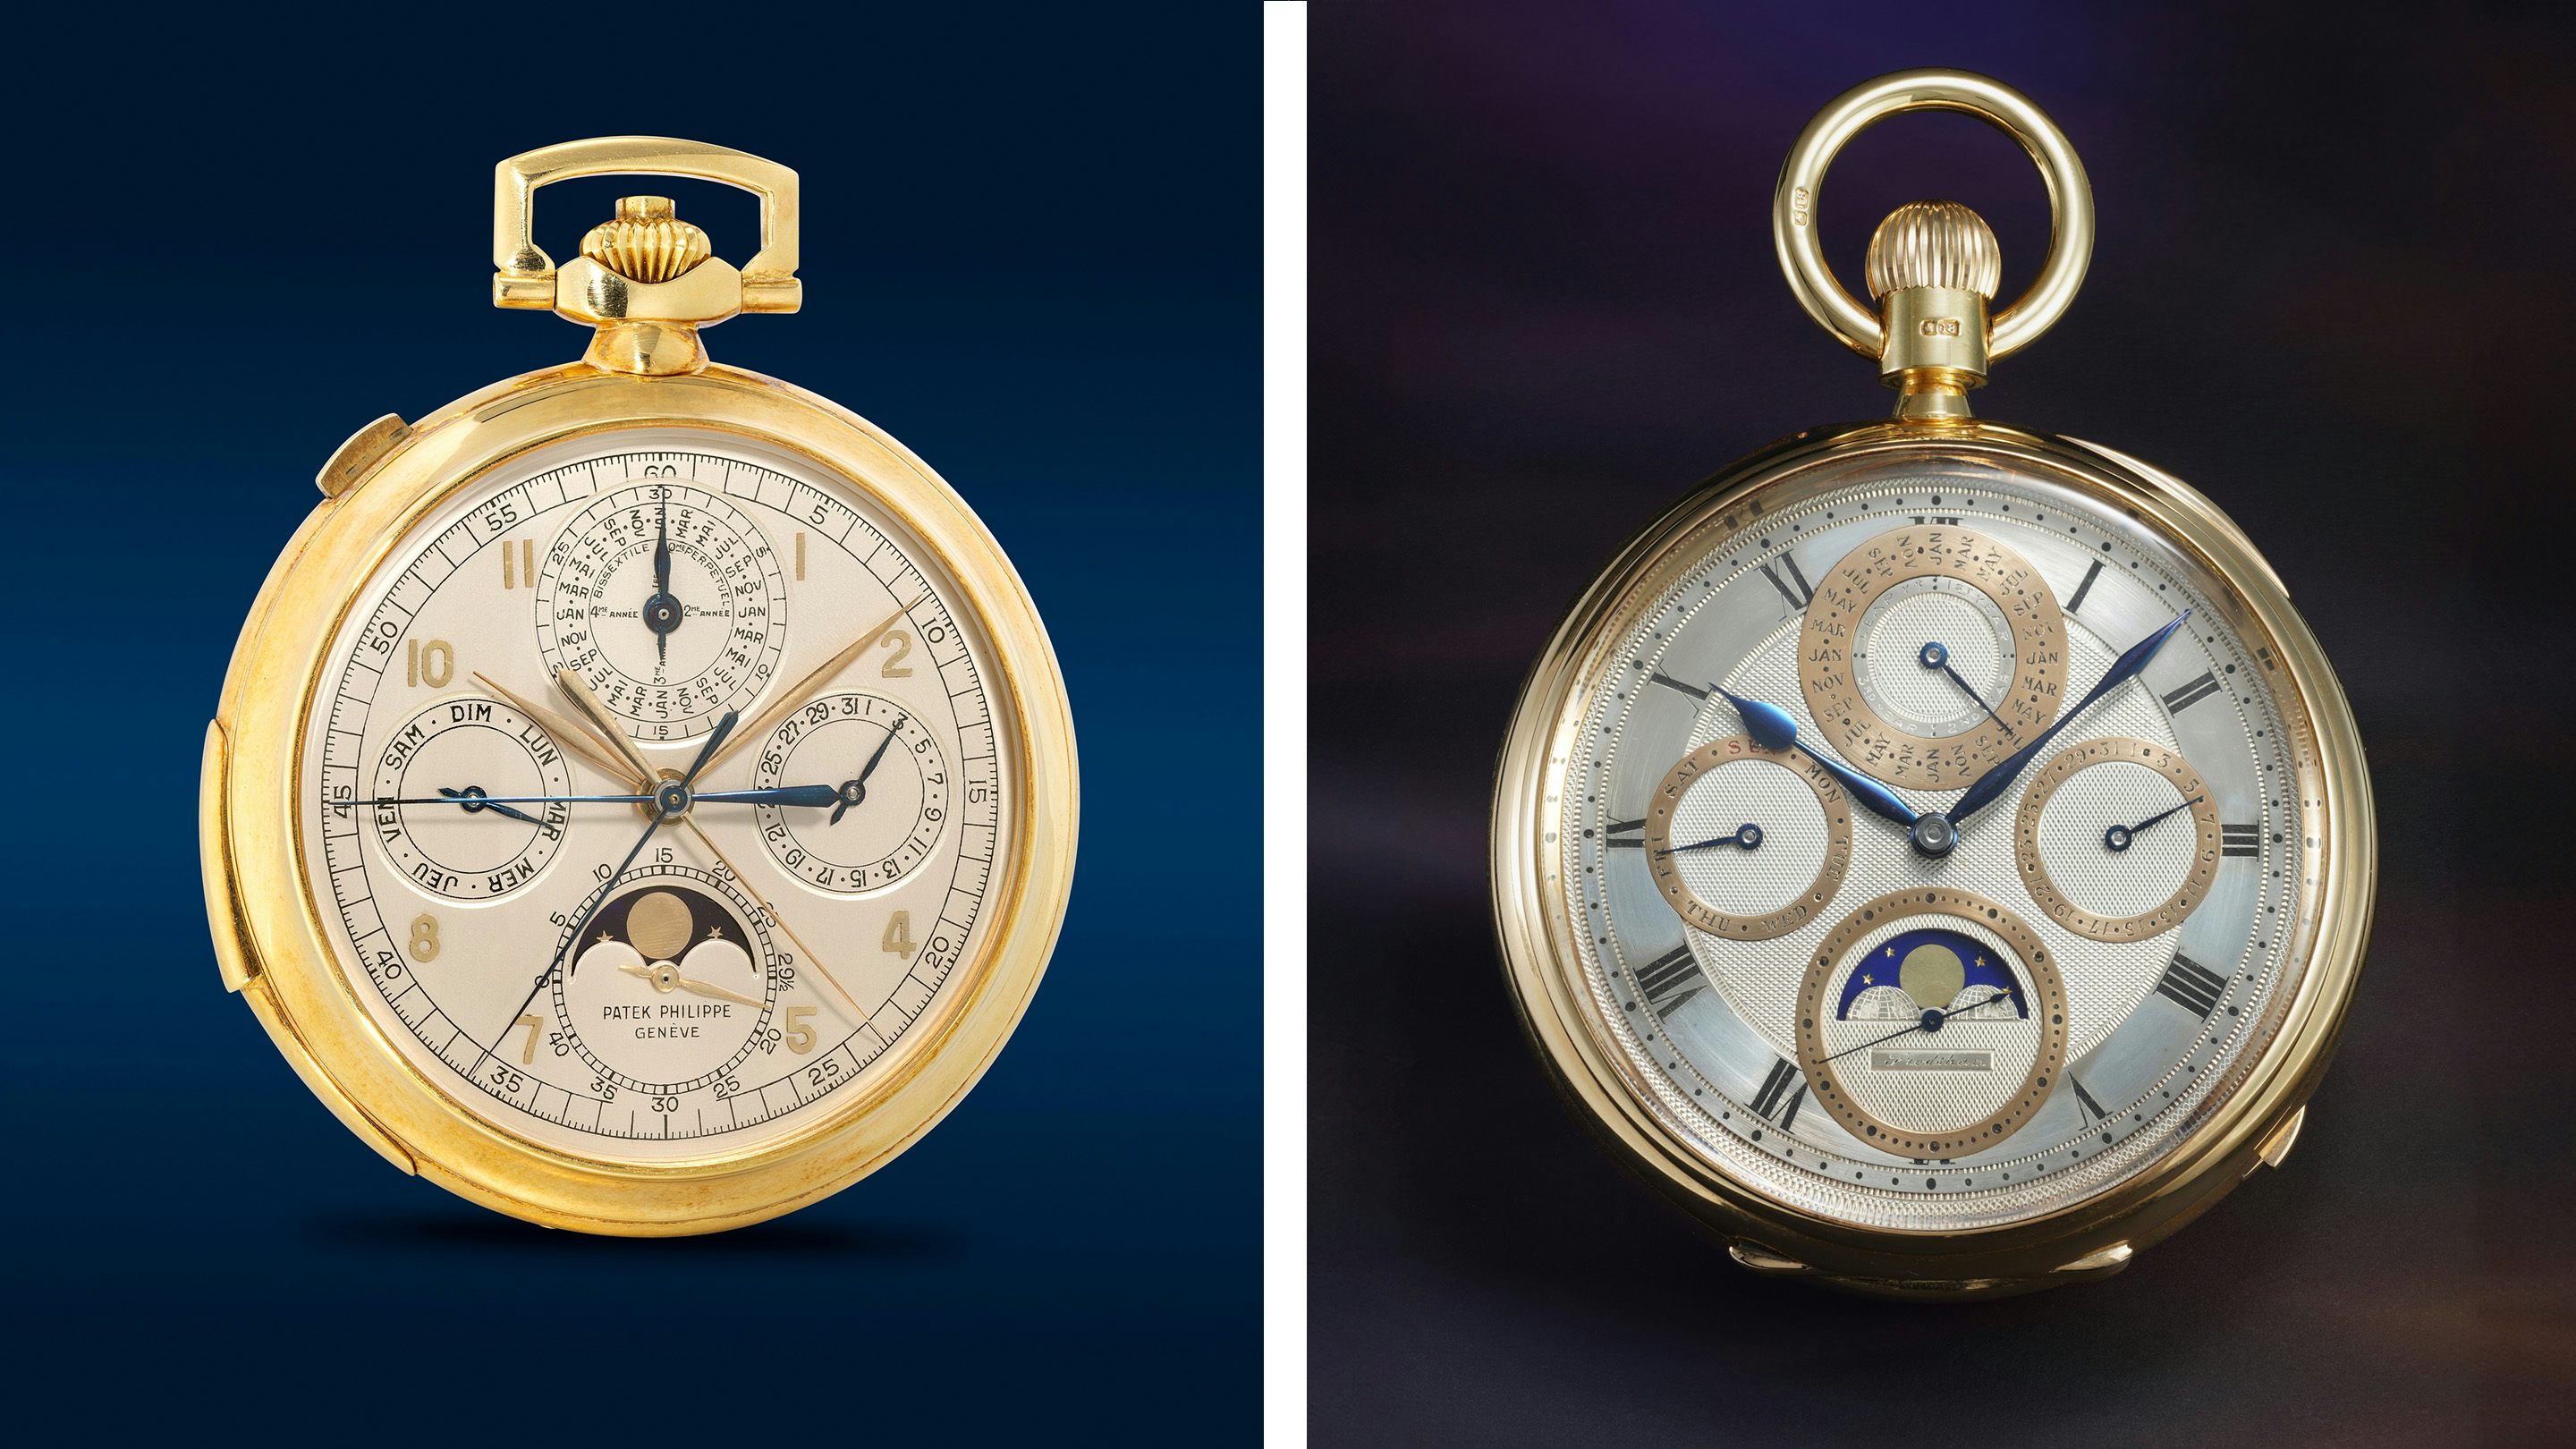 A Patek Philippe Grand Comp double split and a Frodsham clock watch